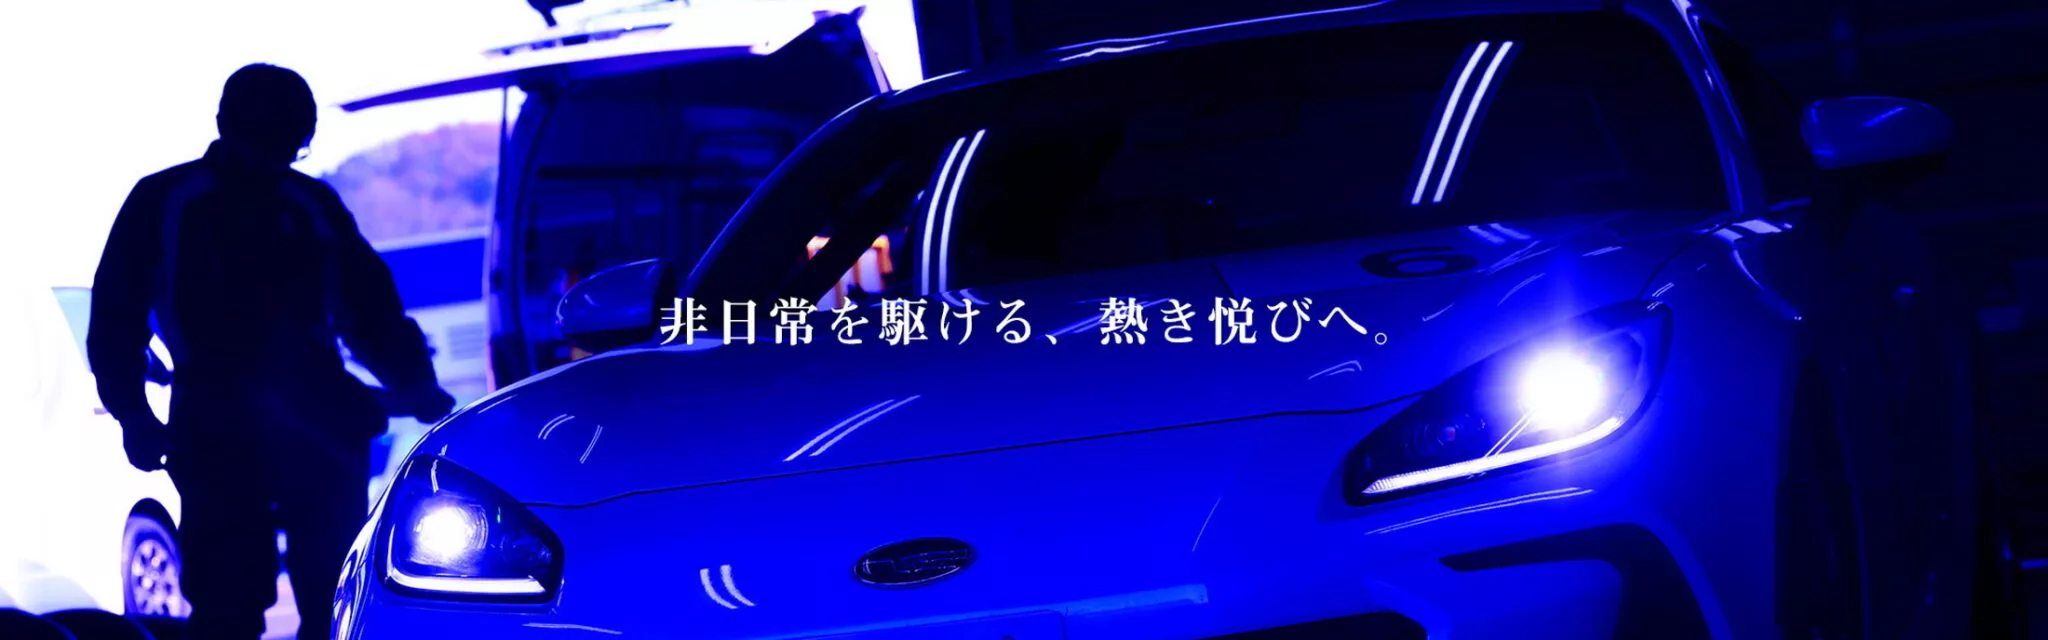 Subaru BRZ Cup Car Basic 